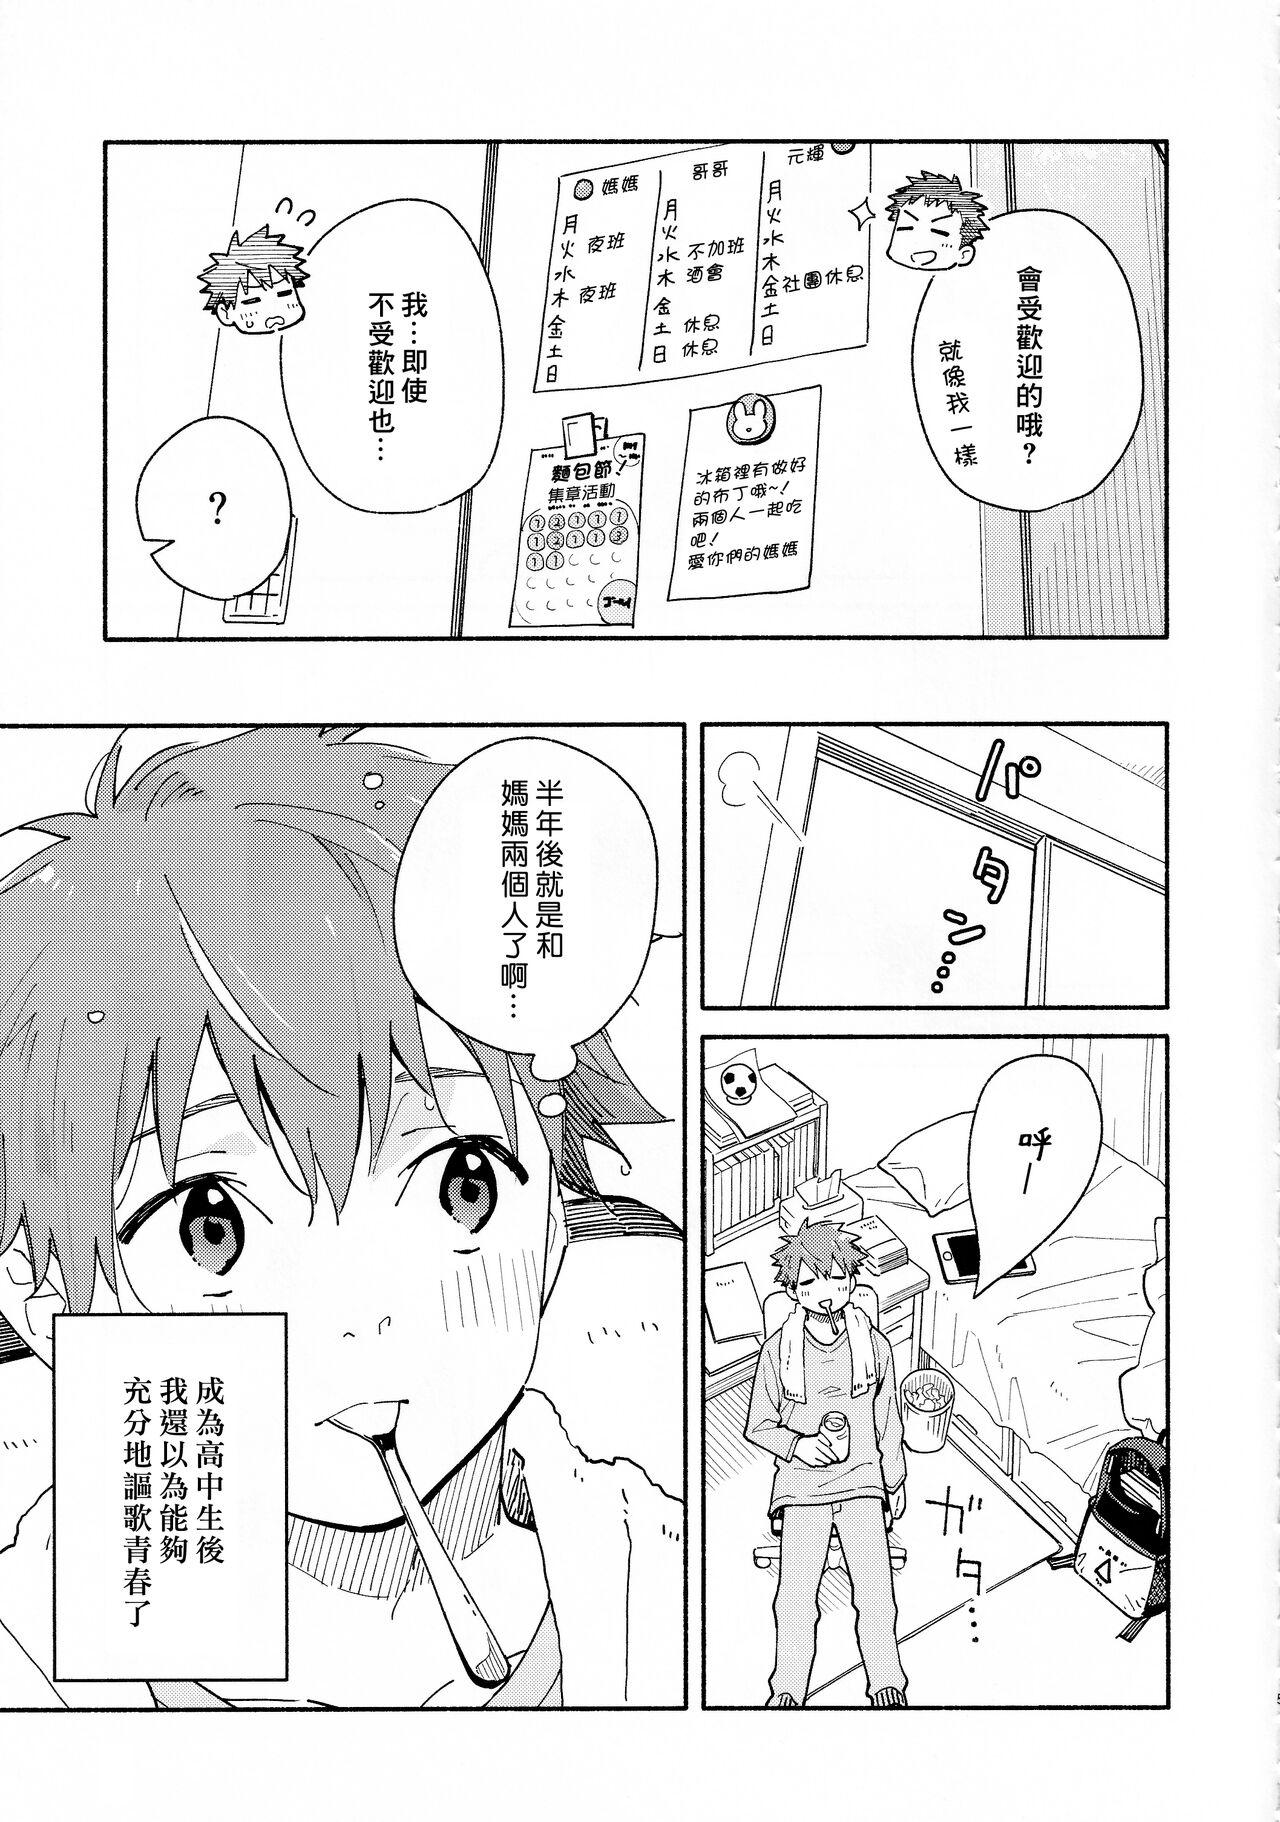 Cartoon 9 Tsuki no soreiyu CLEMENTINE | 9月的太阳 CLEMENTINE - Original Matures - Page 4